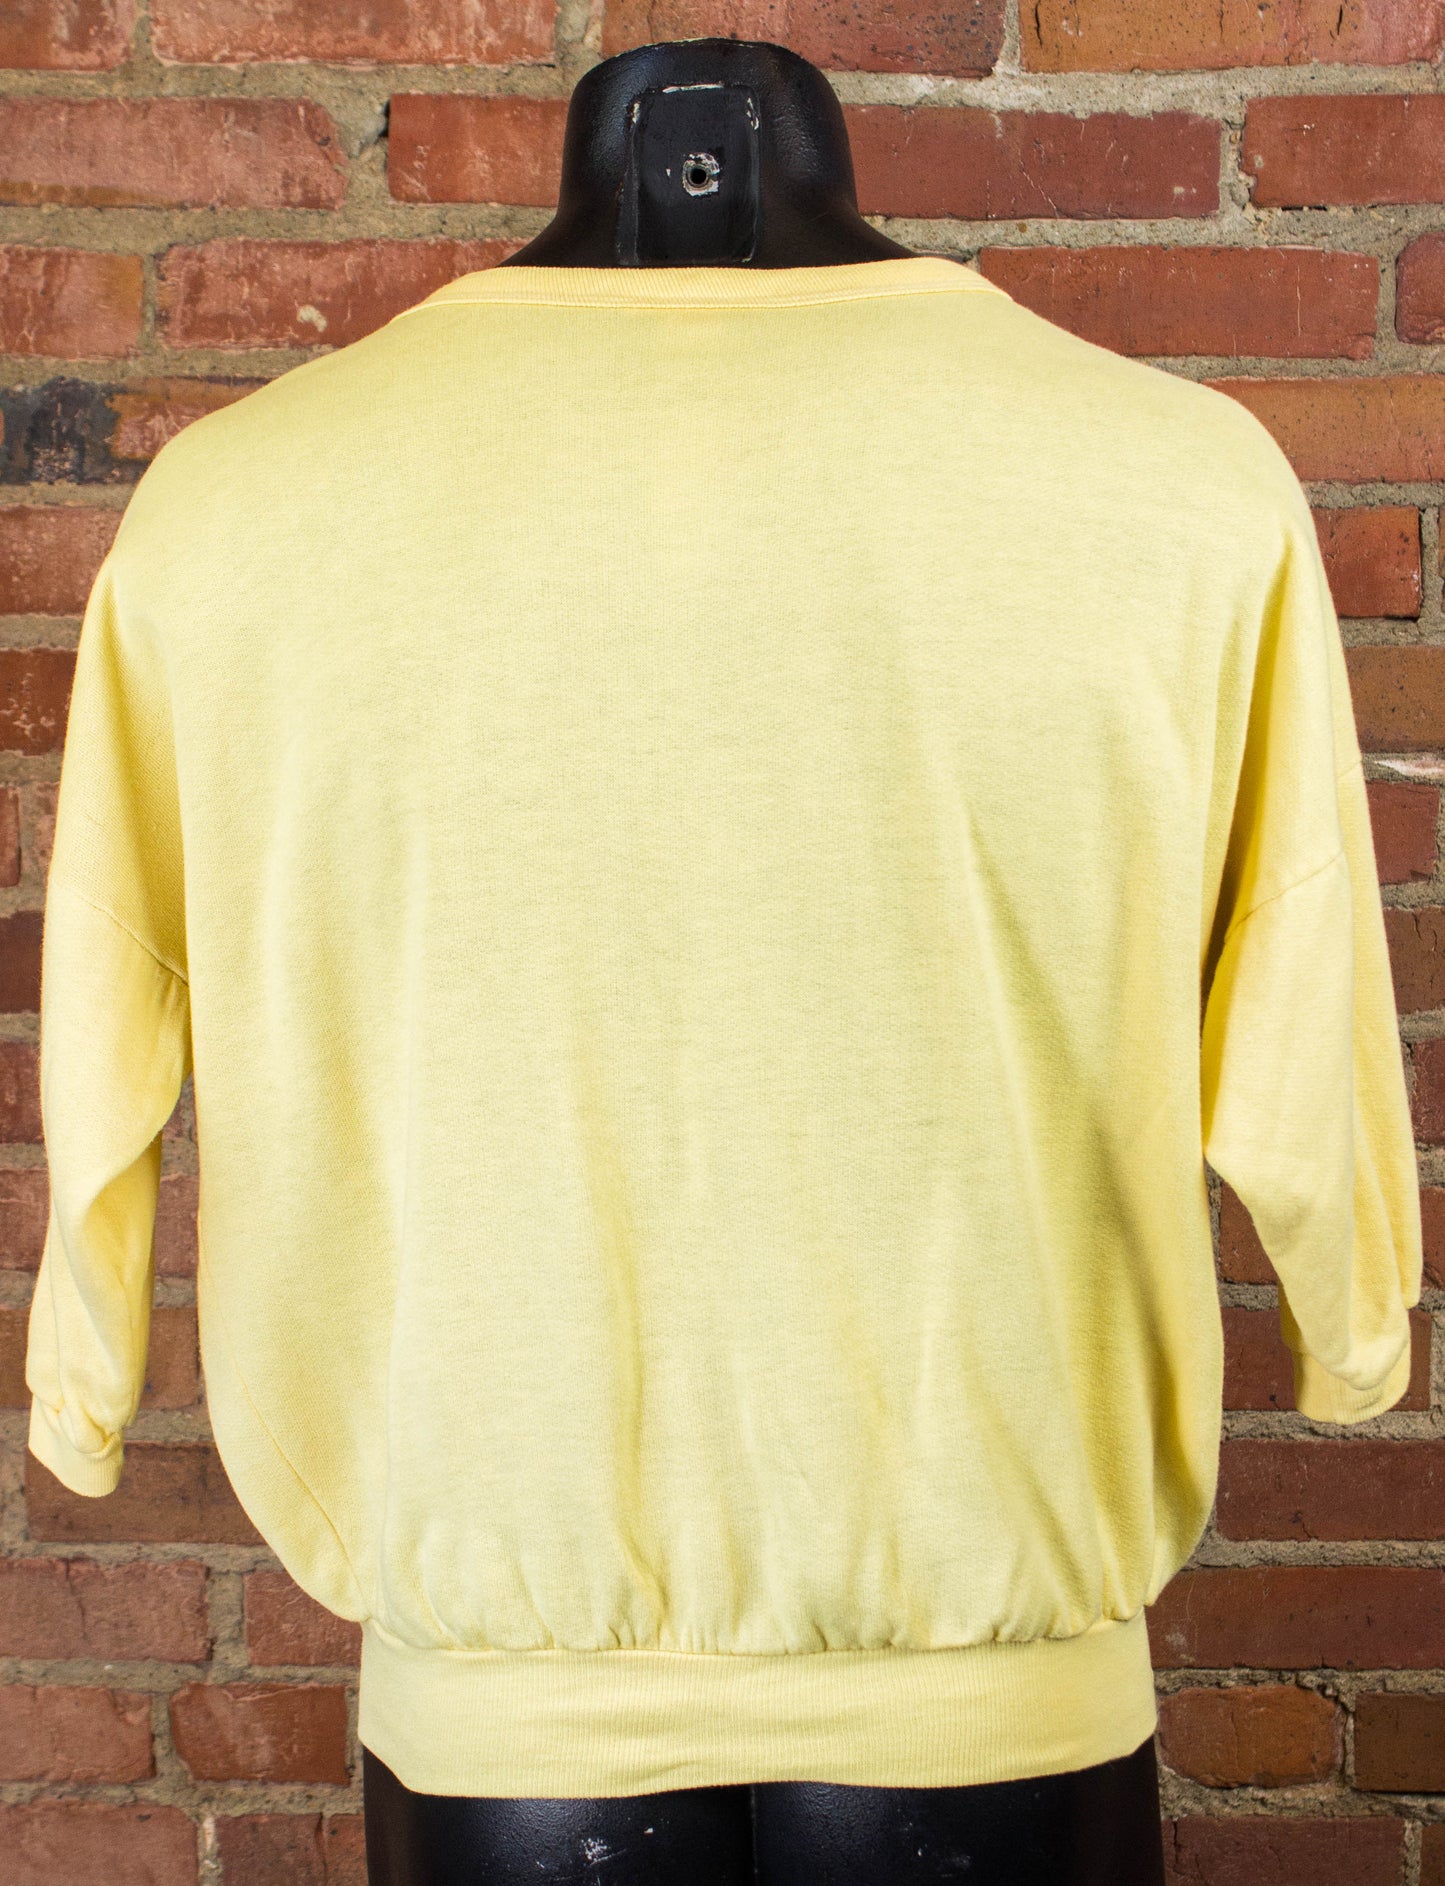 Vintage 80s Glitter Tiger Boxy Fit Short Sleeve Crewneck Sweatshirt Unisex Medium-Large